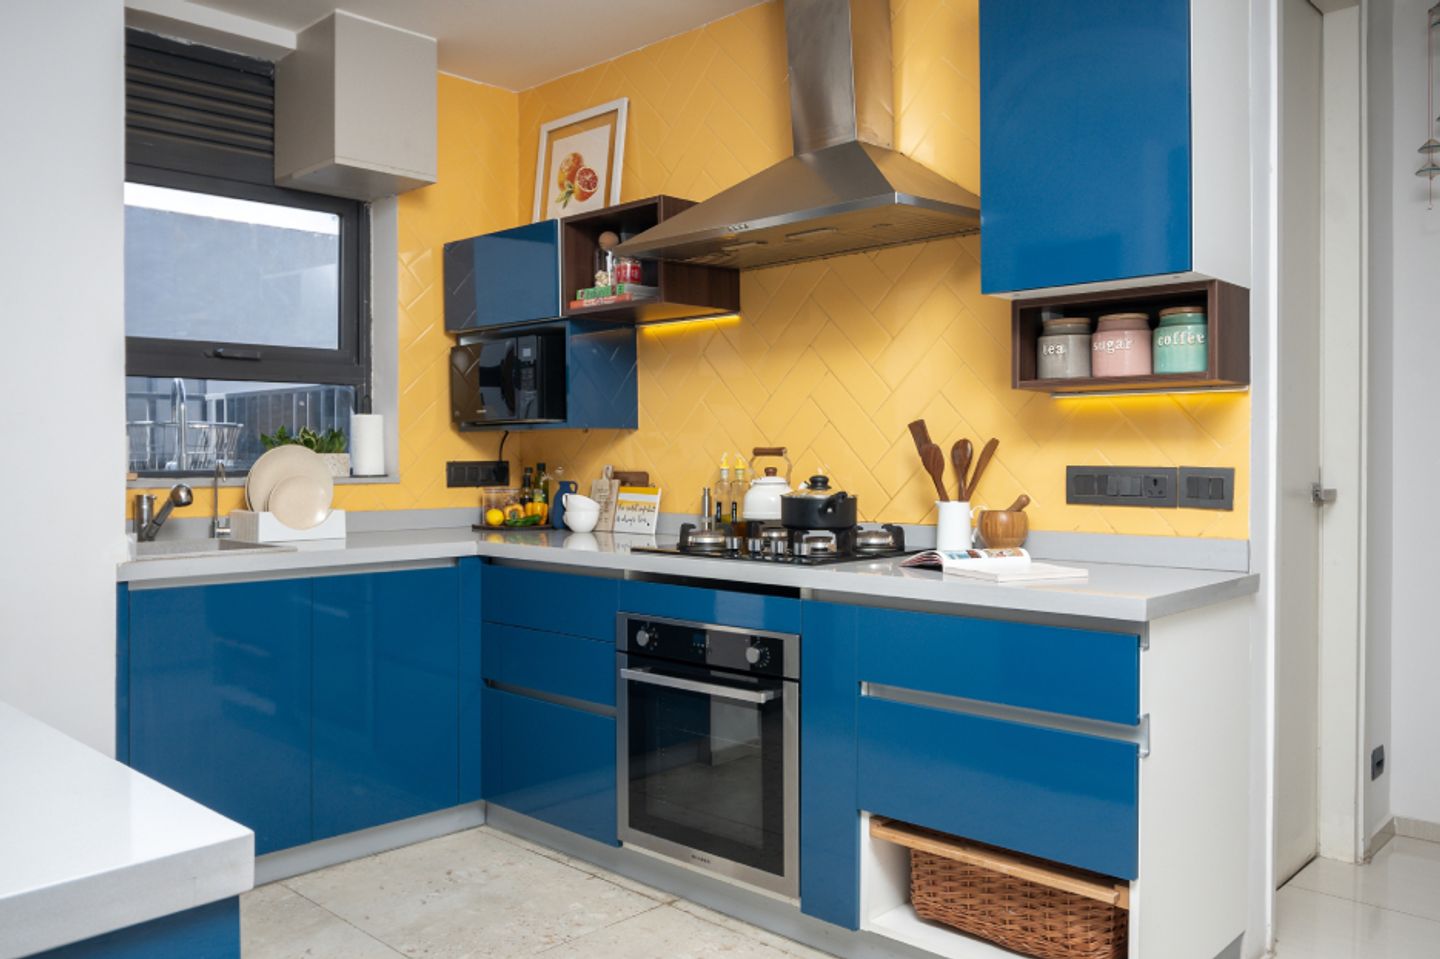 Modern L-Shaped Modular Kitchen Cabinet Design With A Corian Countertop